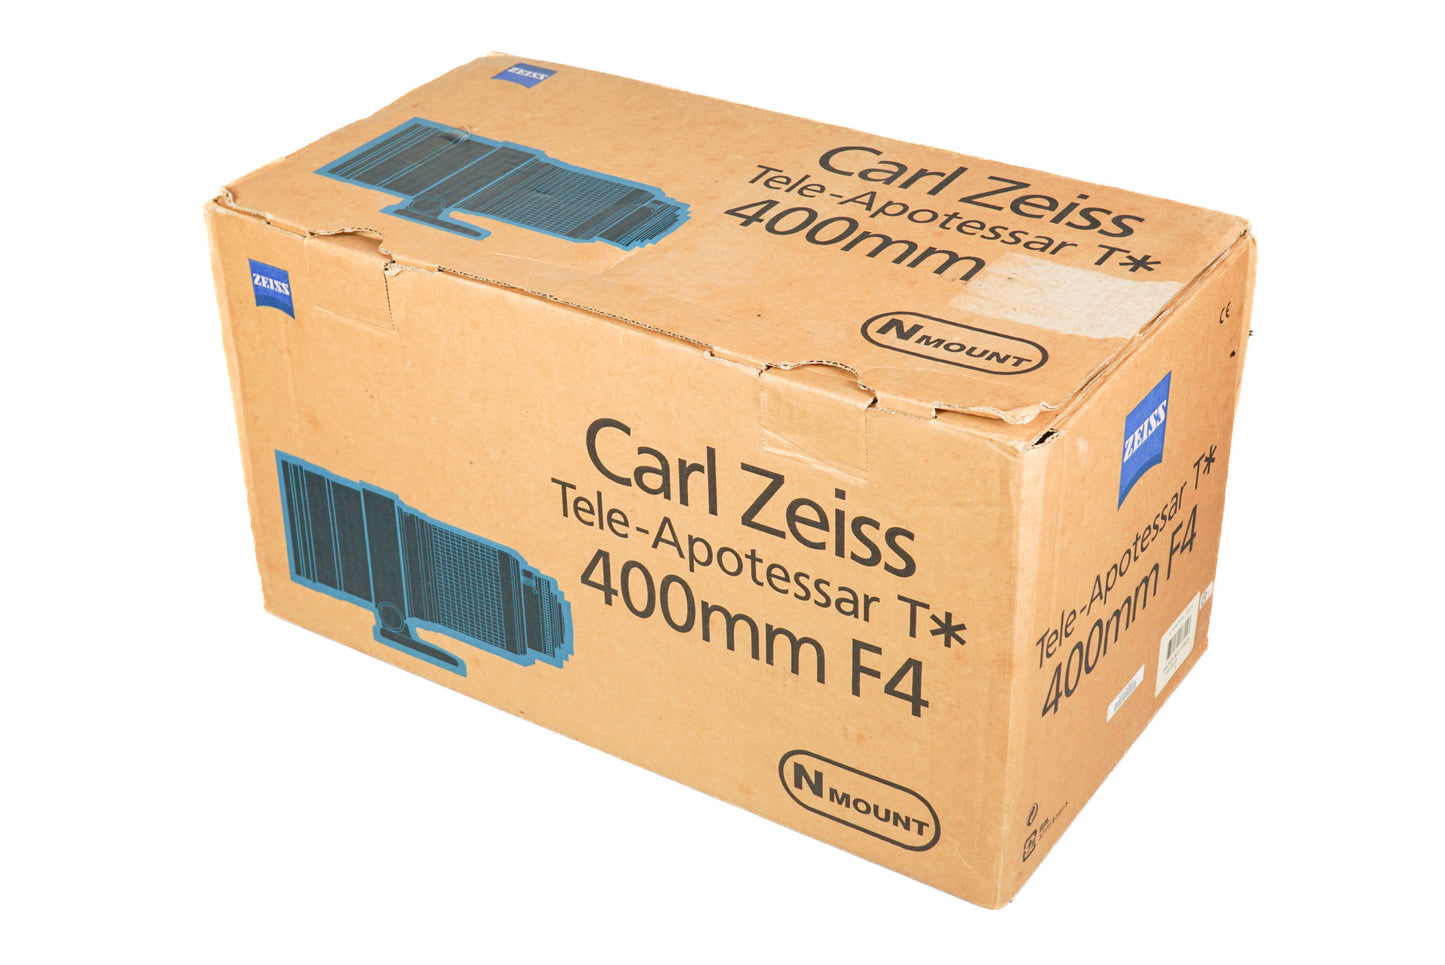 Carl Zeiss 400mm f4 Tele-Apotessar T*